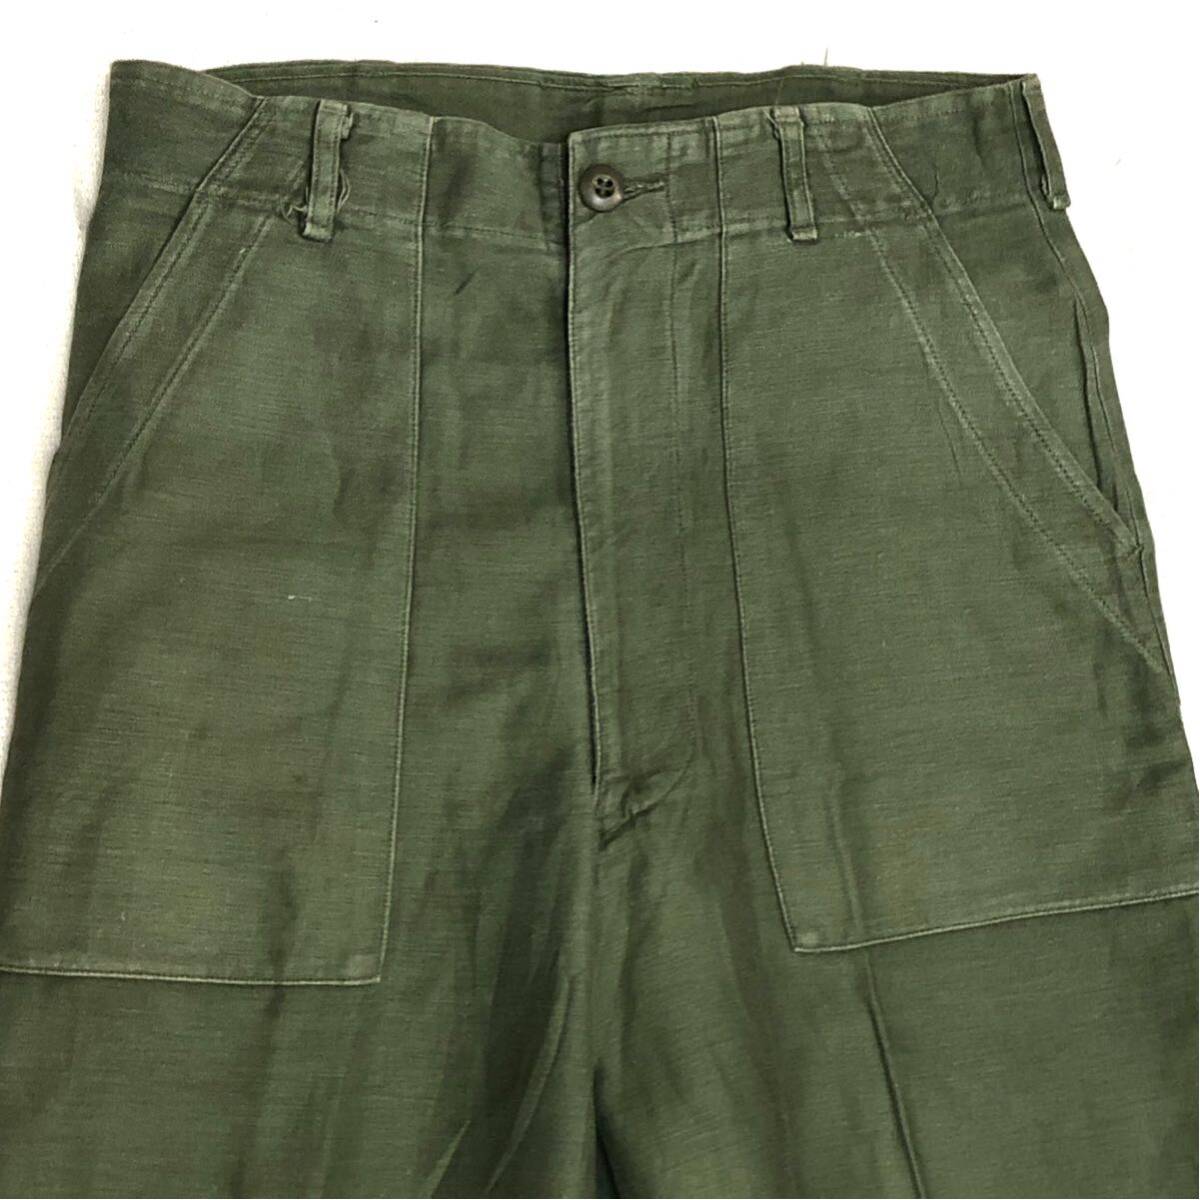 60s W30 Vintage military Army OG107 pants 米軍 ベトナム戦争 ベイカー パンツ ミリタリー ビンテージ Trousers Vietnam War Fieldの画像3